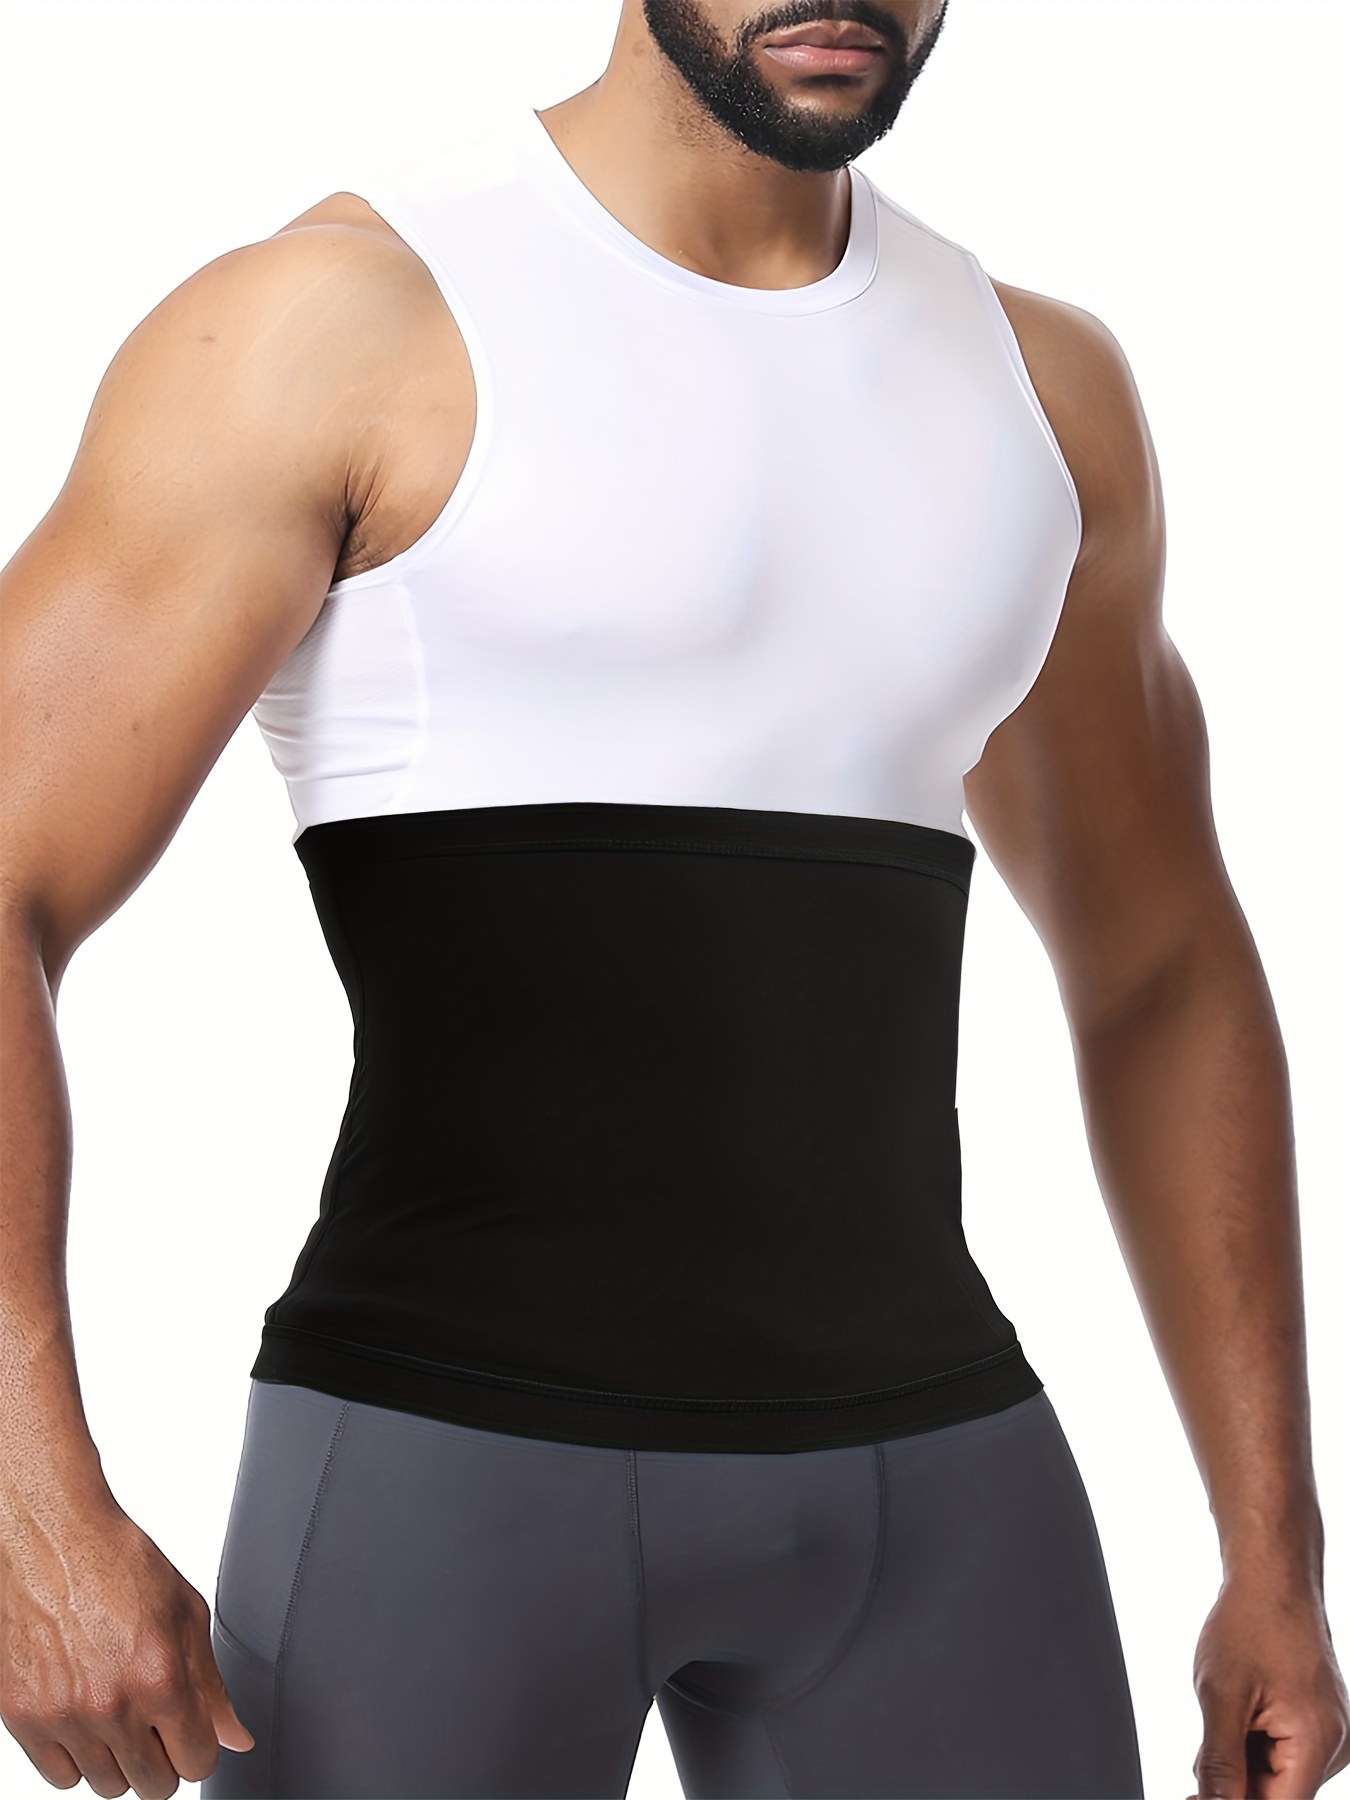 Sweat Slimming Belt for Weight Loss & Tummy Trimmer fot men & women weight  lose belt